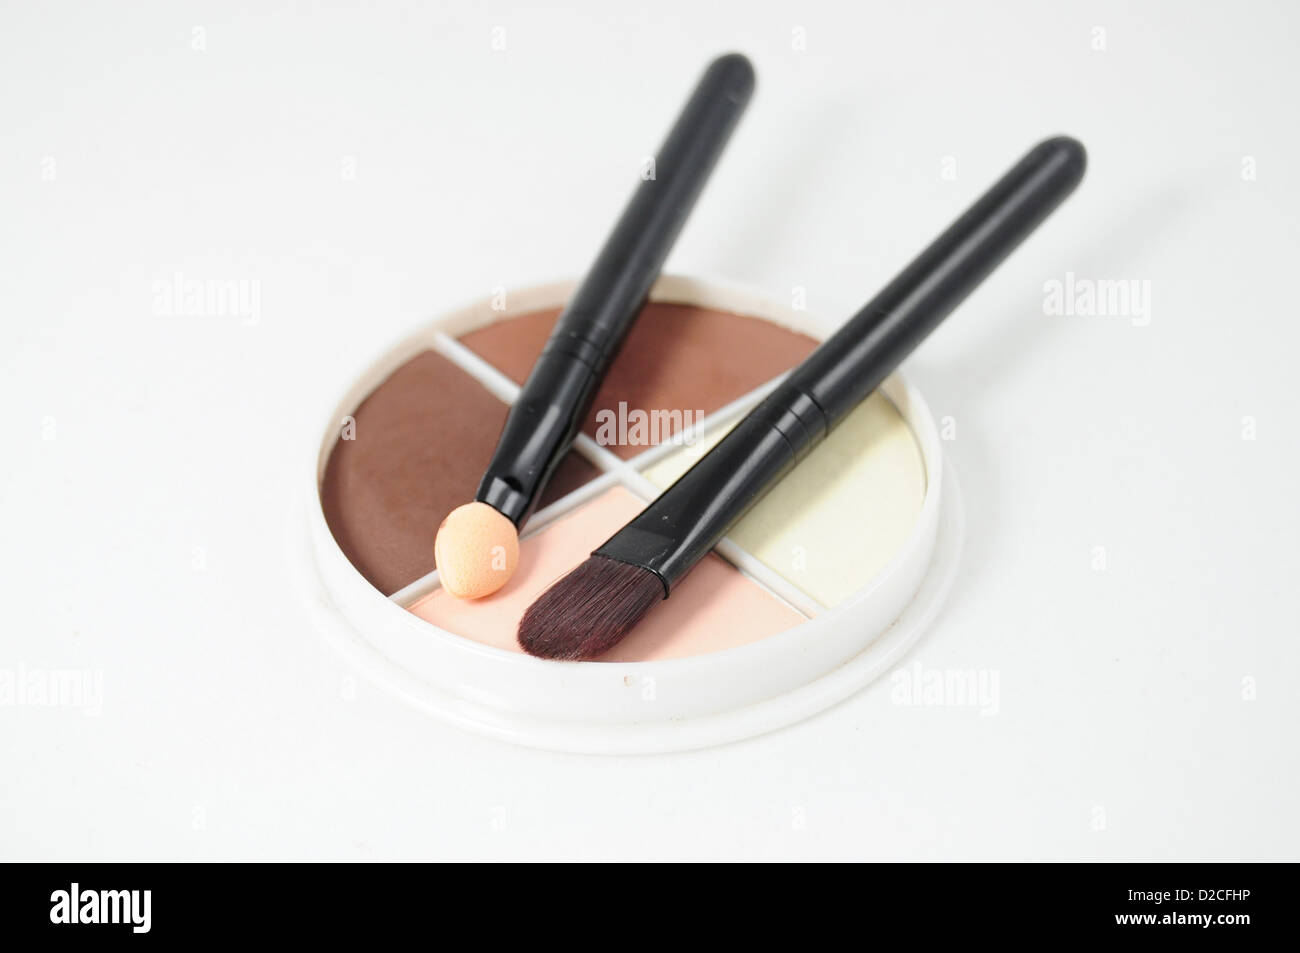 Set of four eyeshadows and makeup brushes on white background Stock Photo